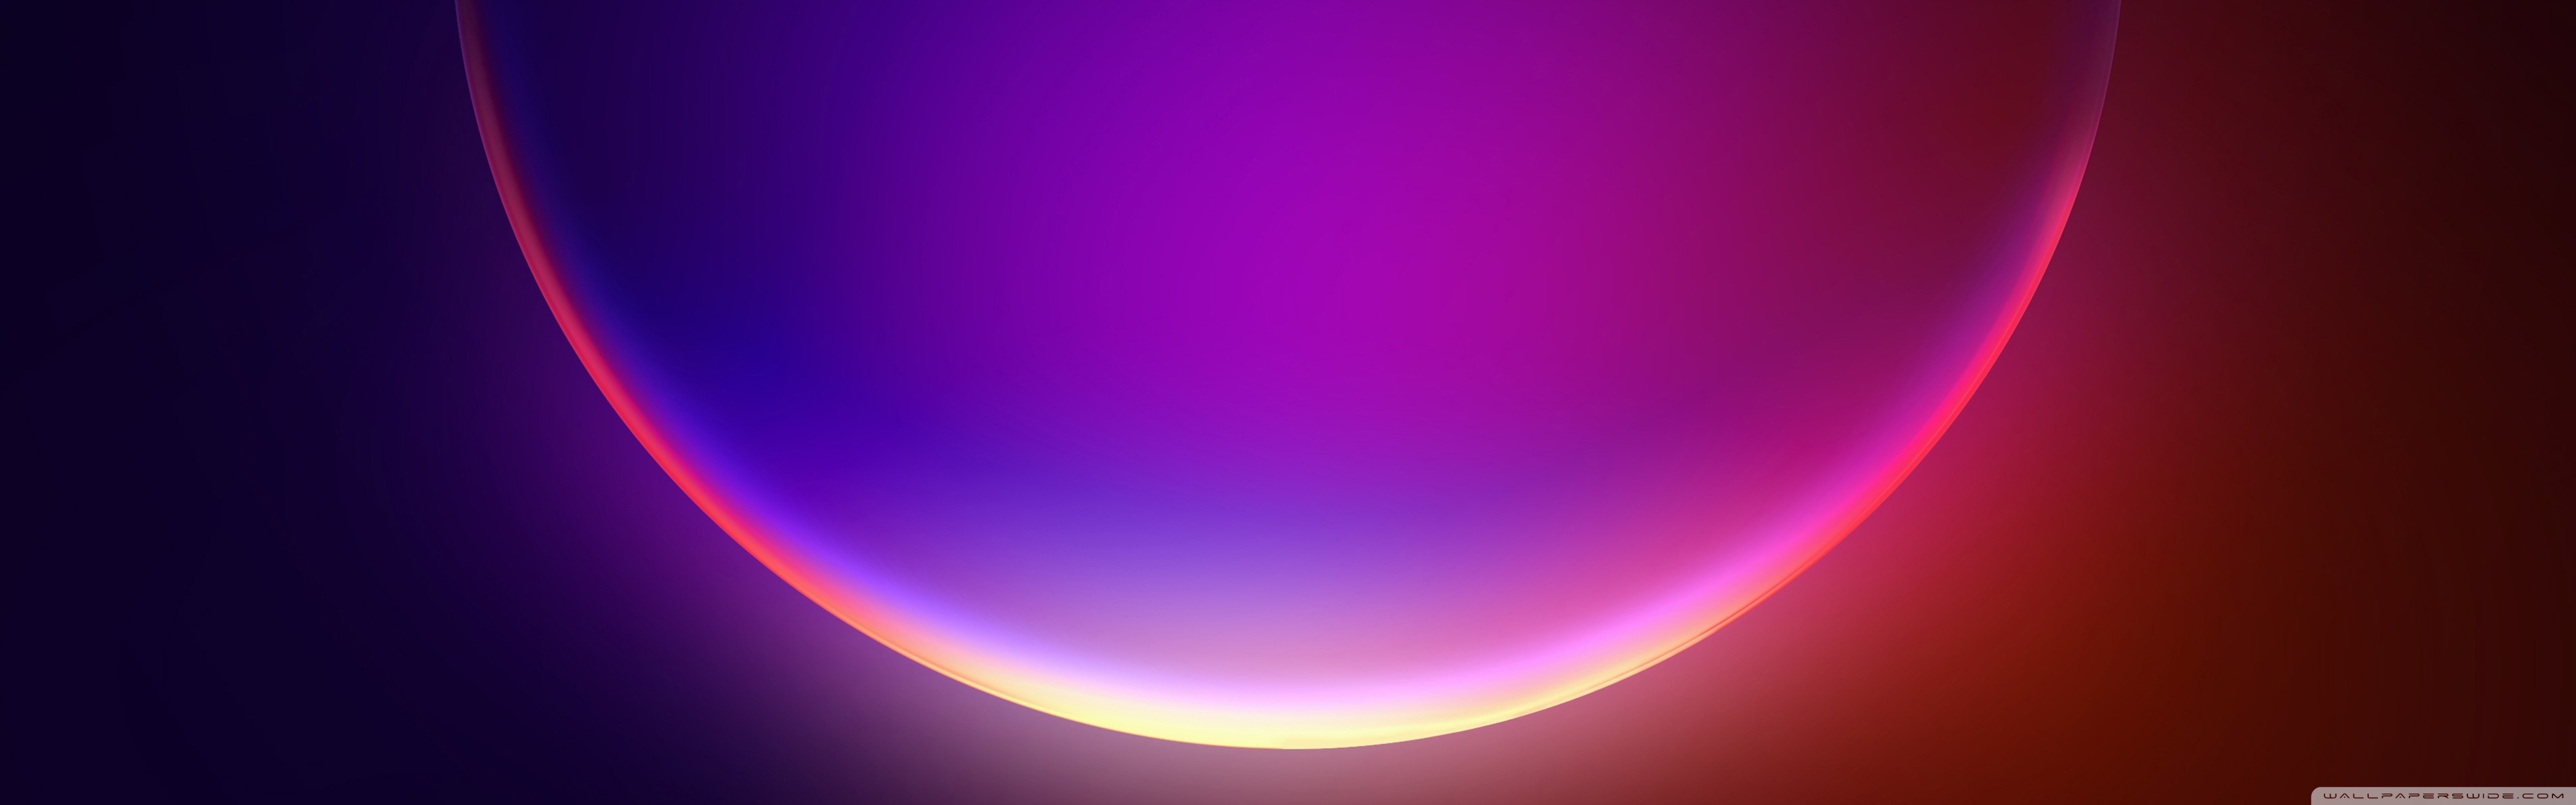 Purple Circle Aesthetic Ultra HD Desktop Background Wallpaper for ...